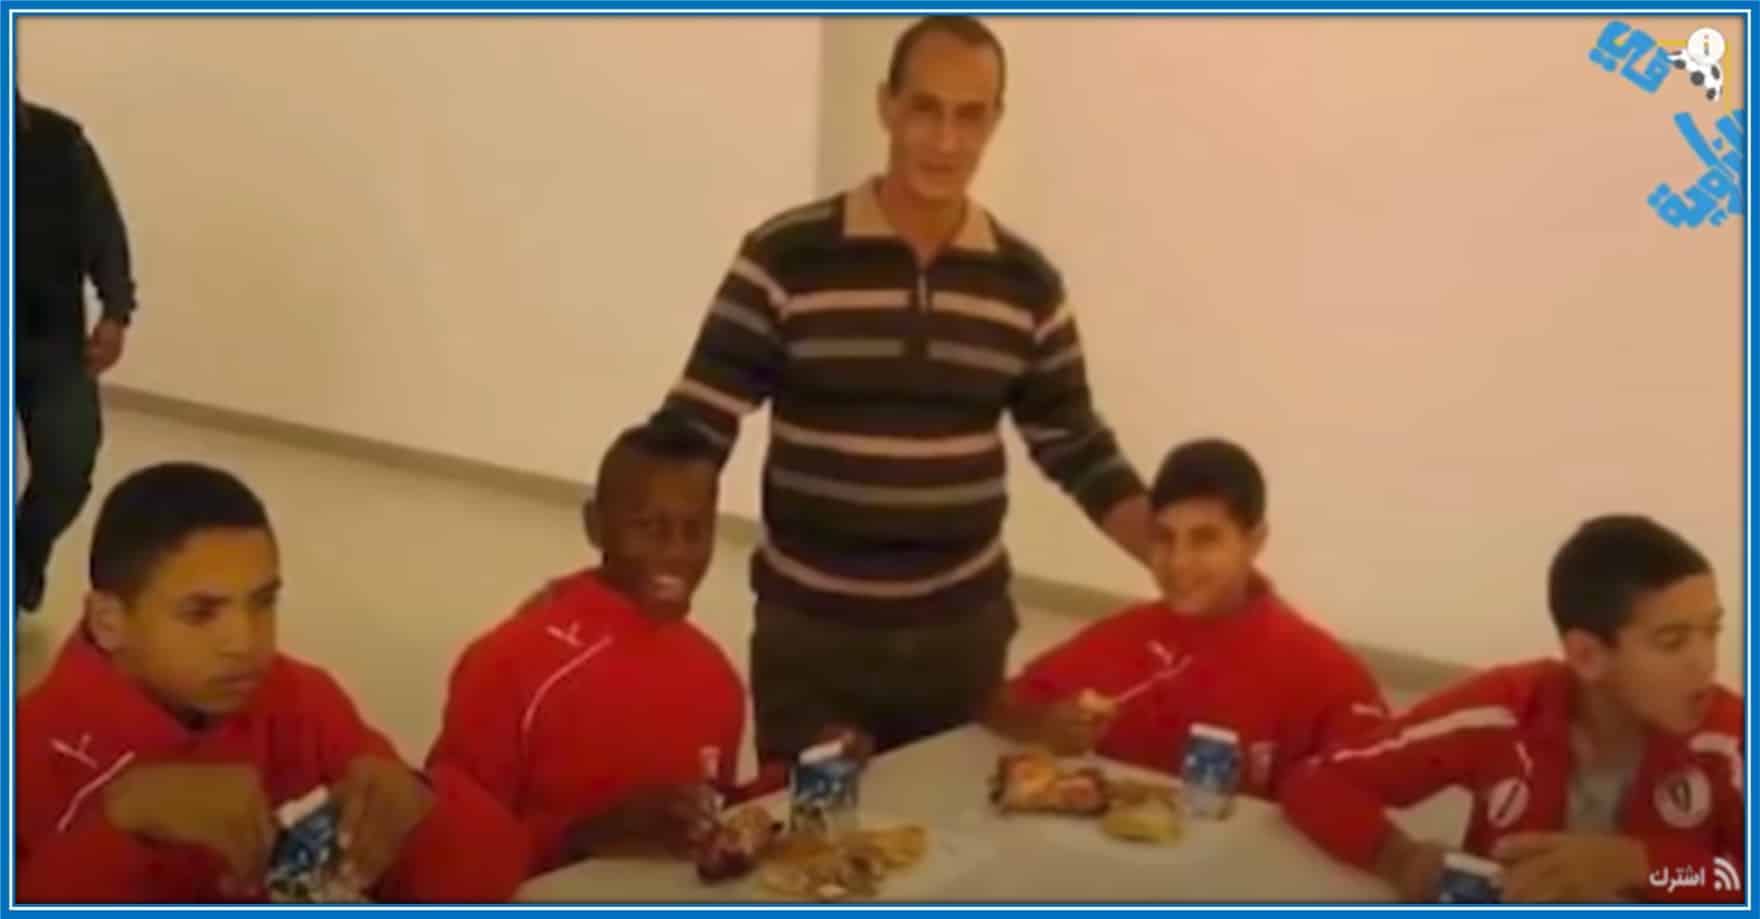 Youssef En-Nesyri - with the Académie Mohammed VI de football programme.